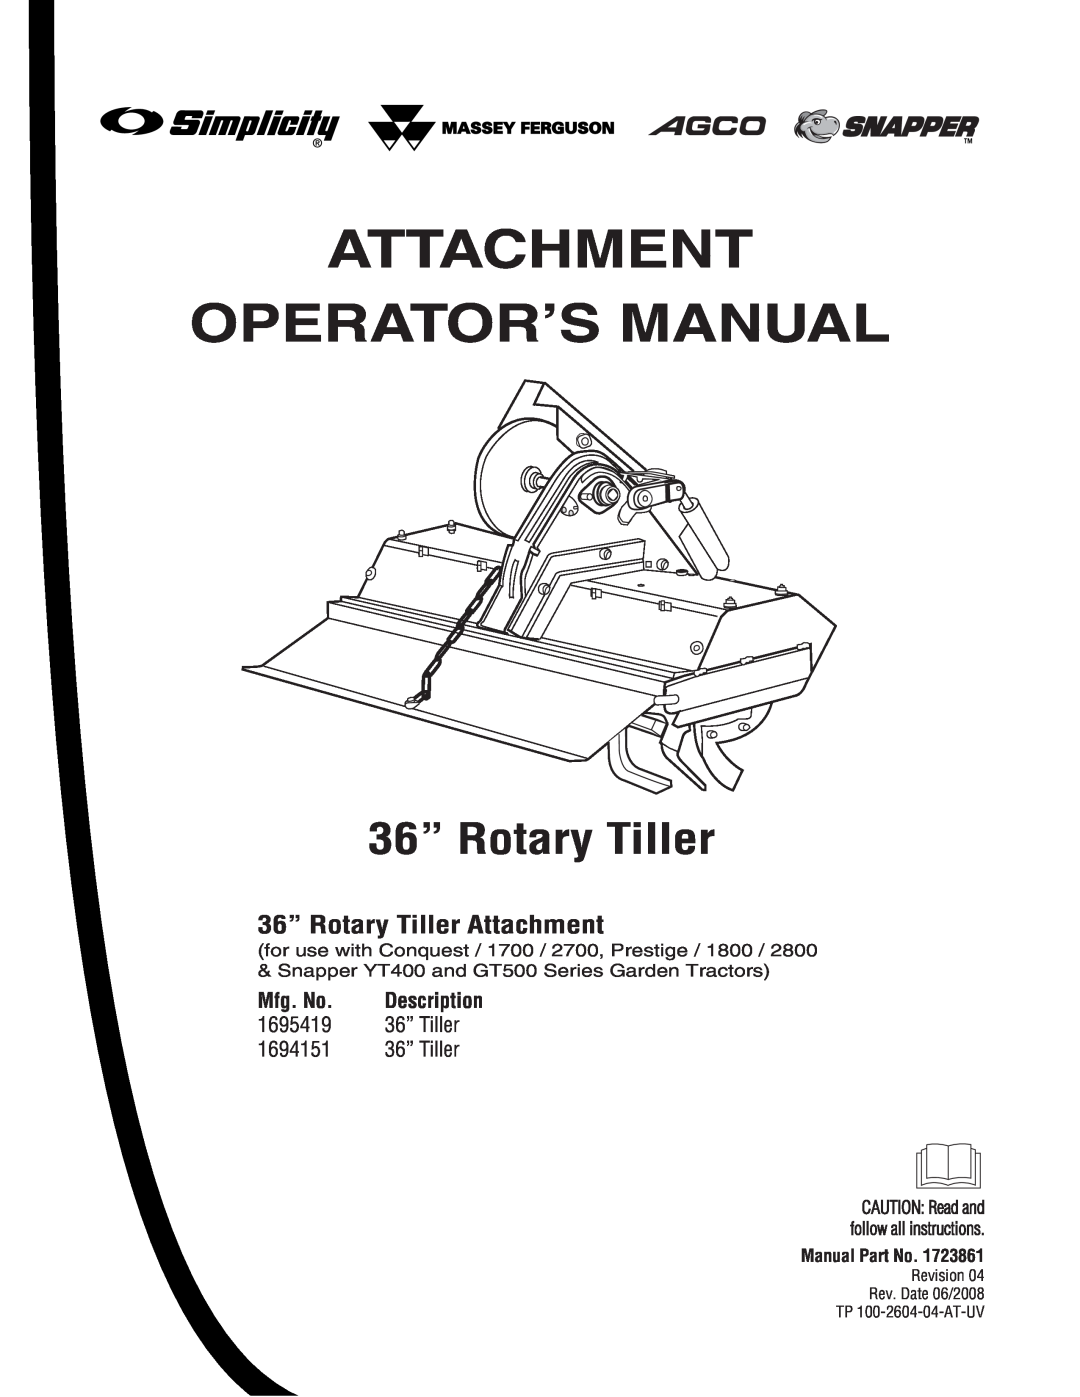 Snapper 1694151 manual 36” Rotary Tiller Attachment, Mfg. No, 1695419, 36” Tiller, Attachment Operator’S Manual 